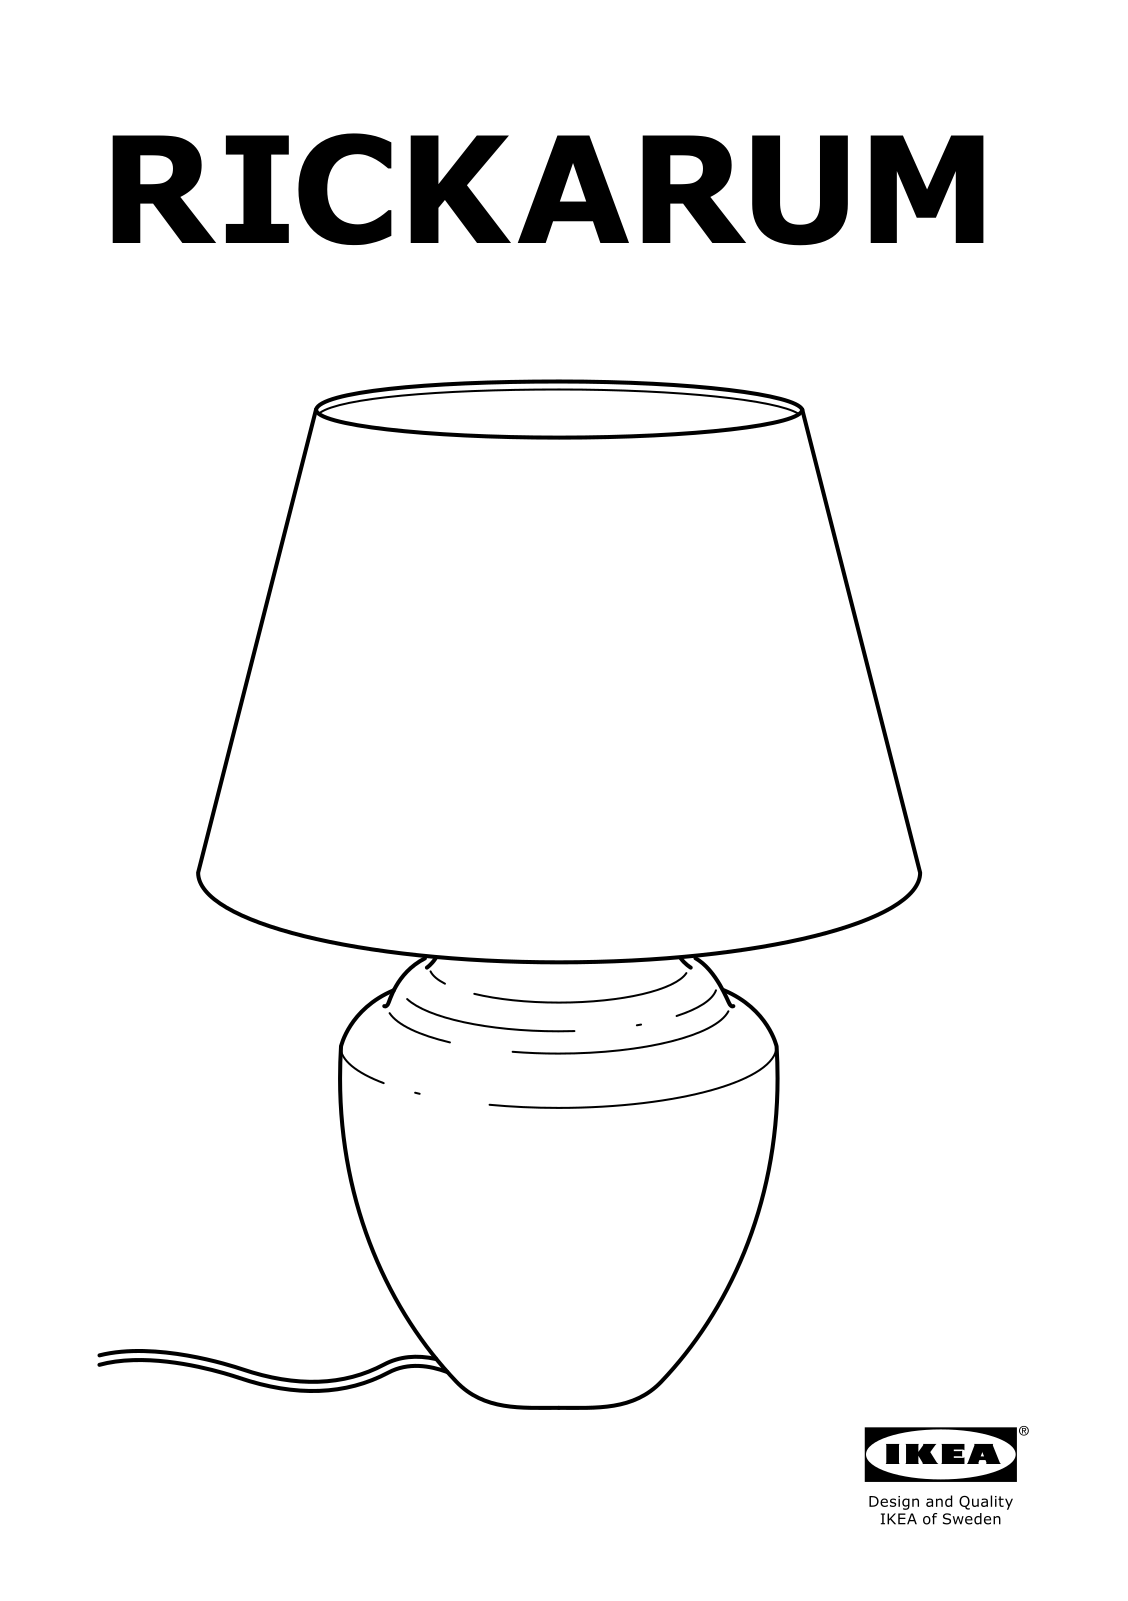 IKEA RICKARUM User Manual